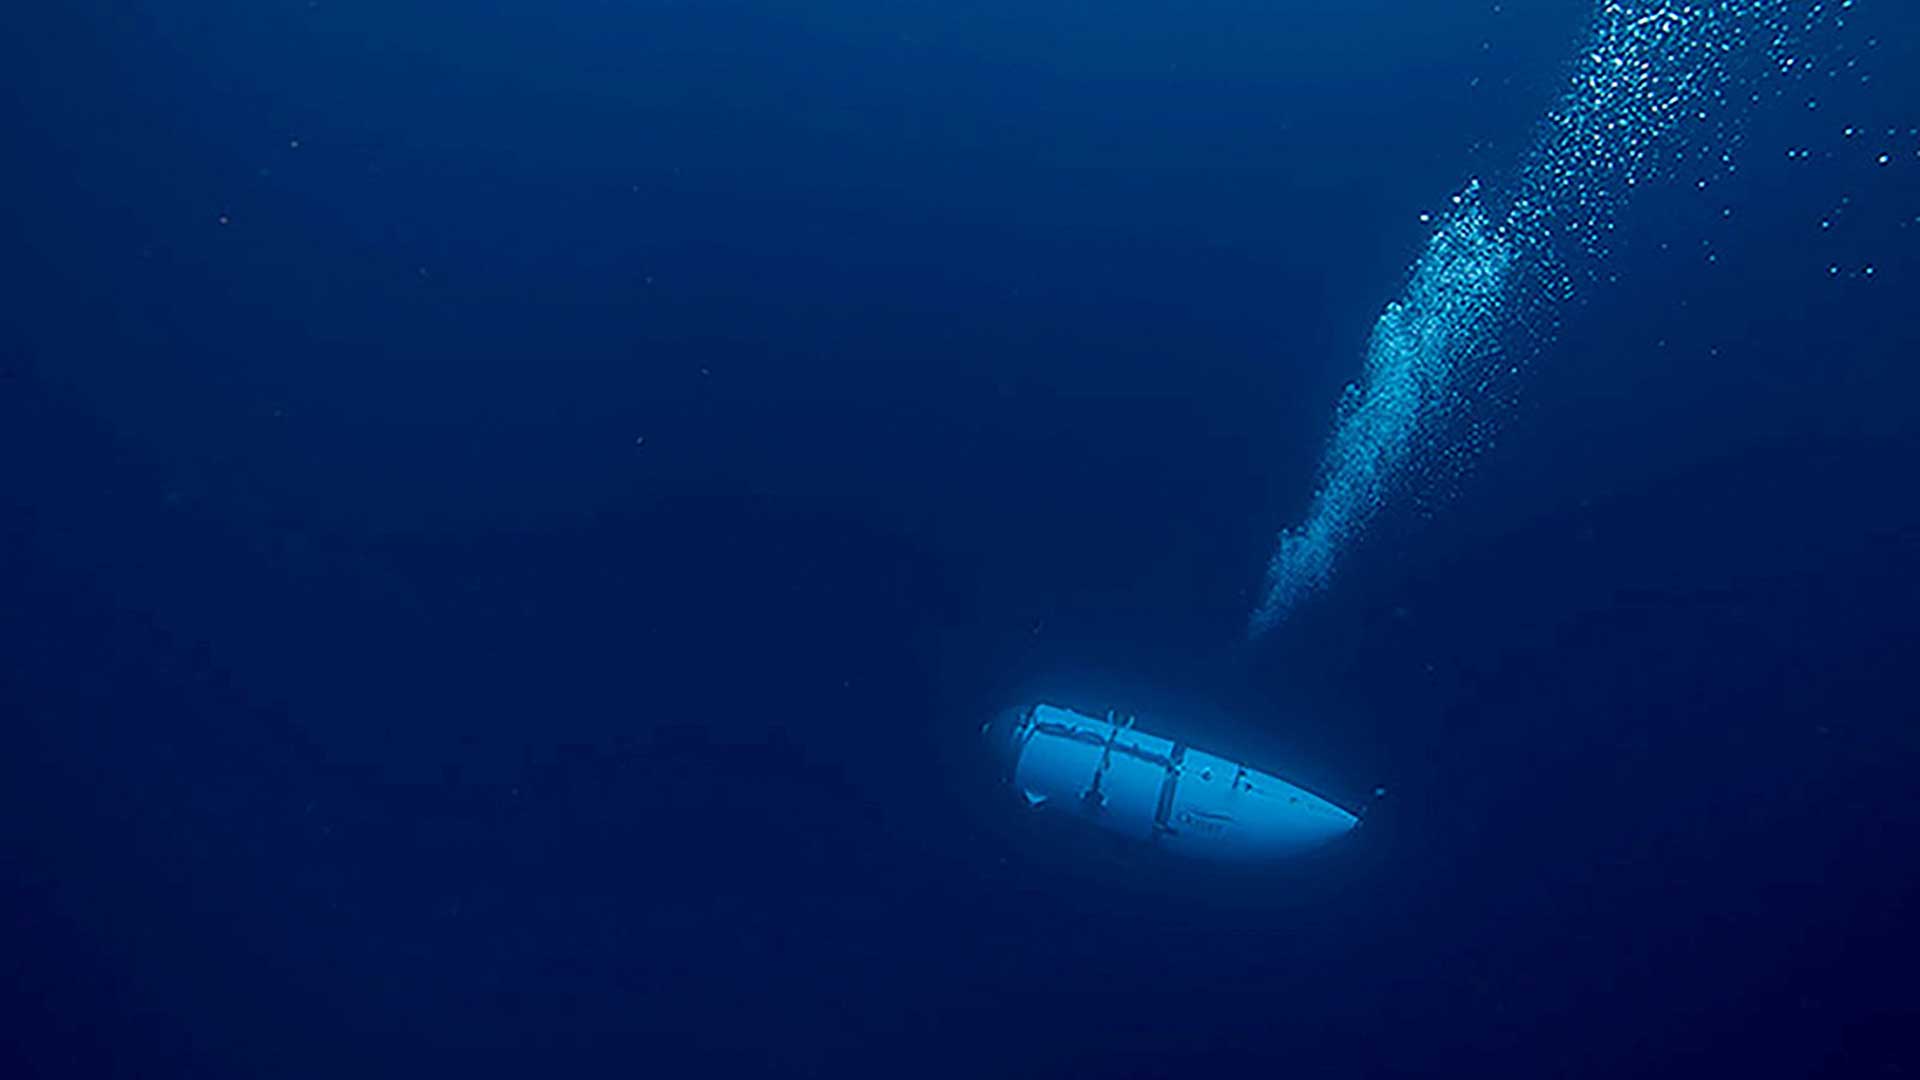 Undated photo of OceanGate's Titan submersible. (SOURCE: OceanGate)